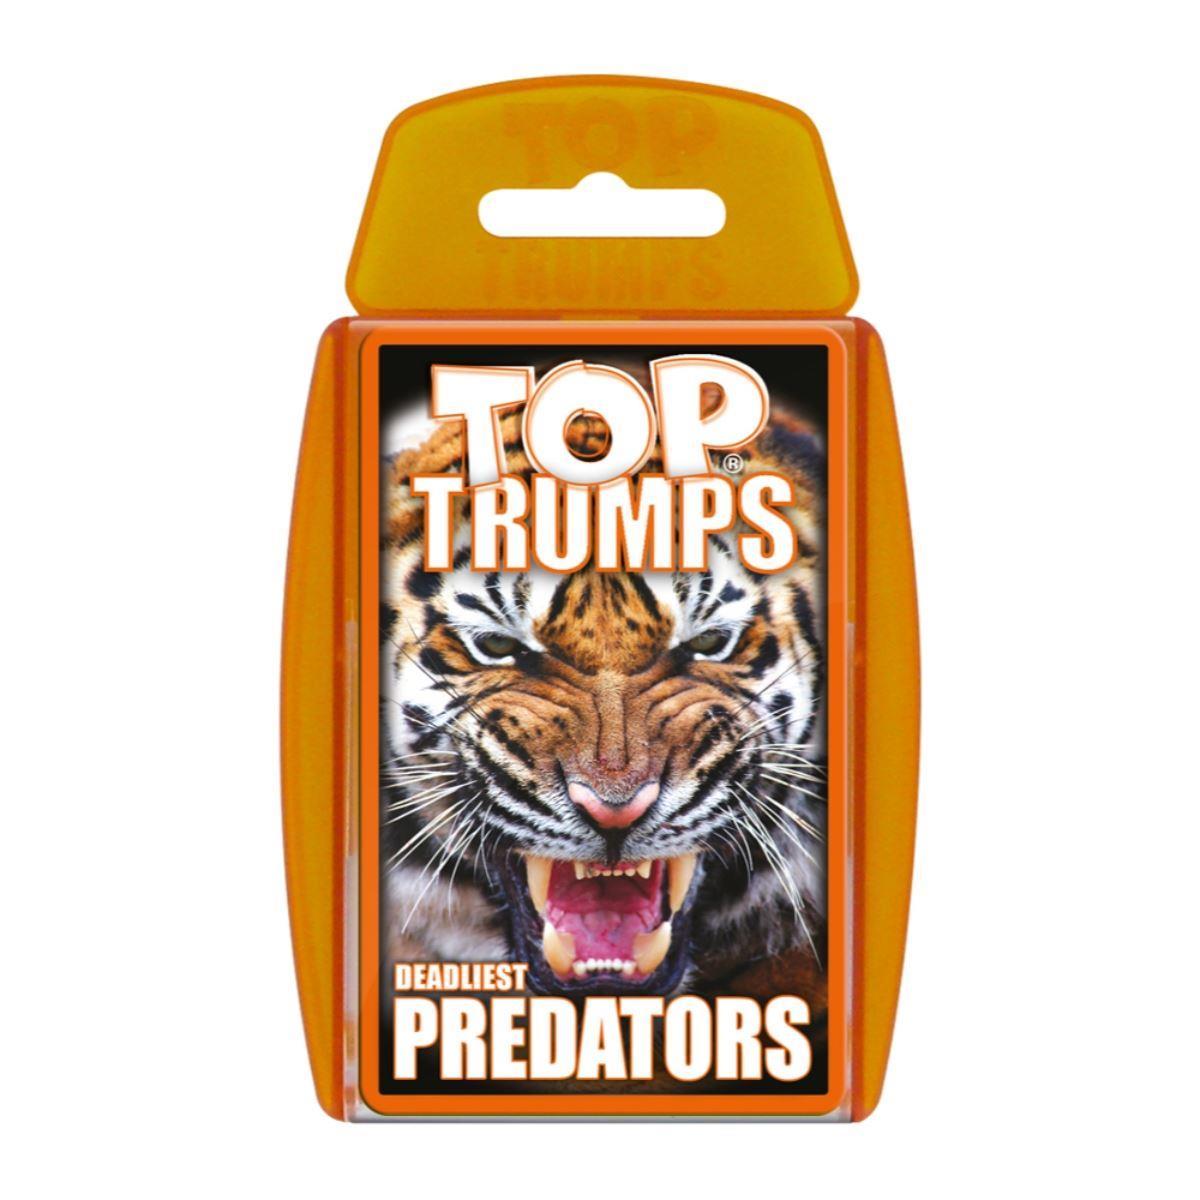 Top Trumps Deadliest Predators Card Game